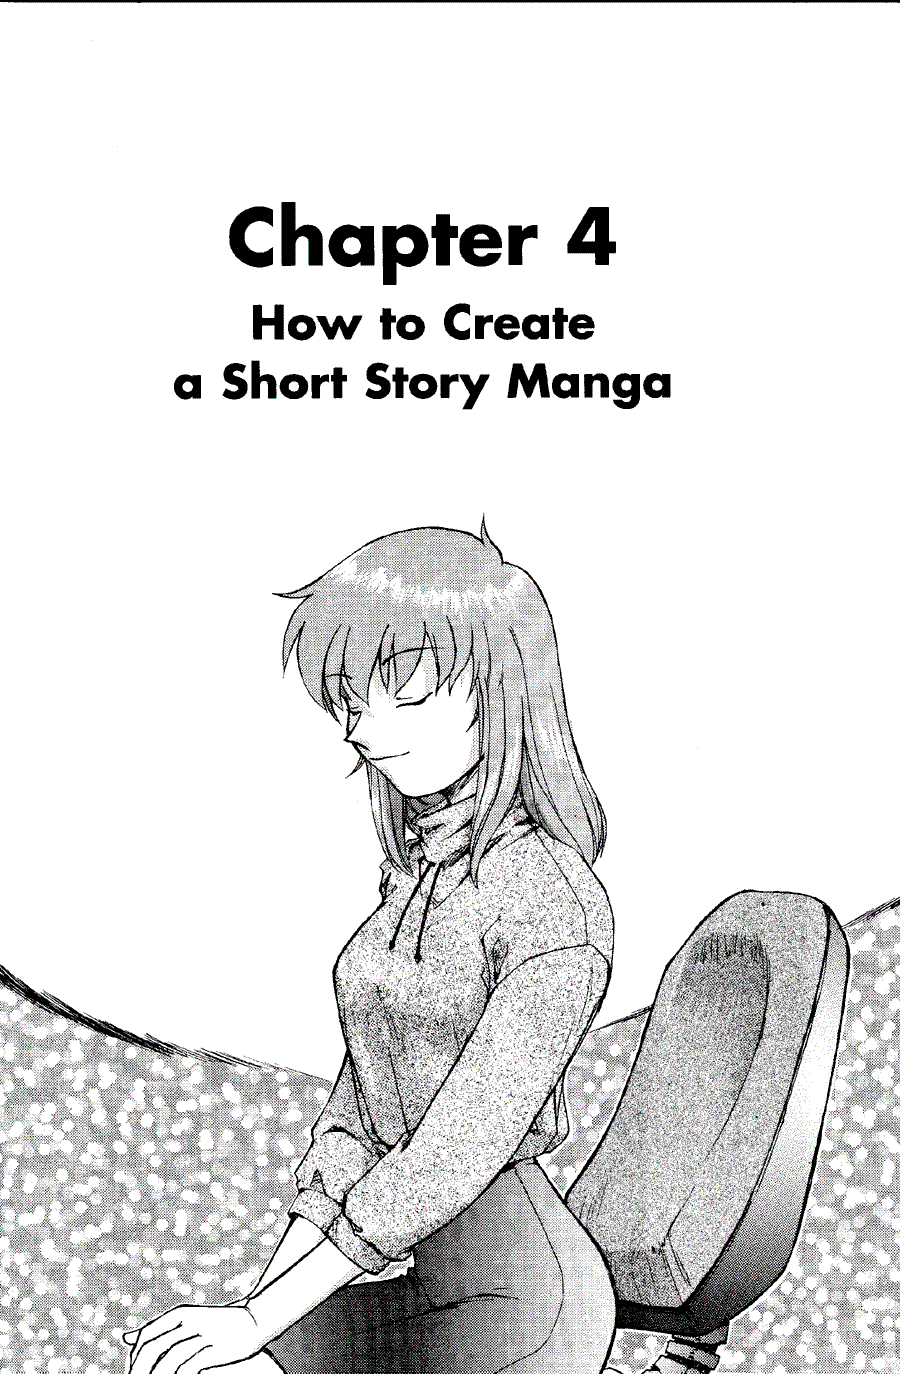 Now to draw Manga: Compiling Application - Now to draw Manga ></a>
<script language=JavaScript> 
  var txt = 